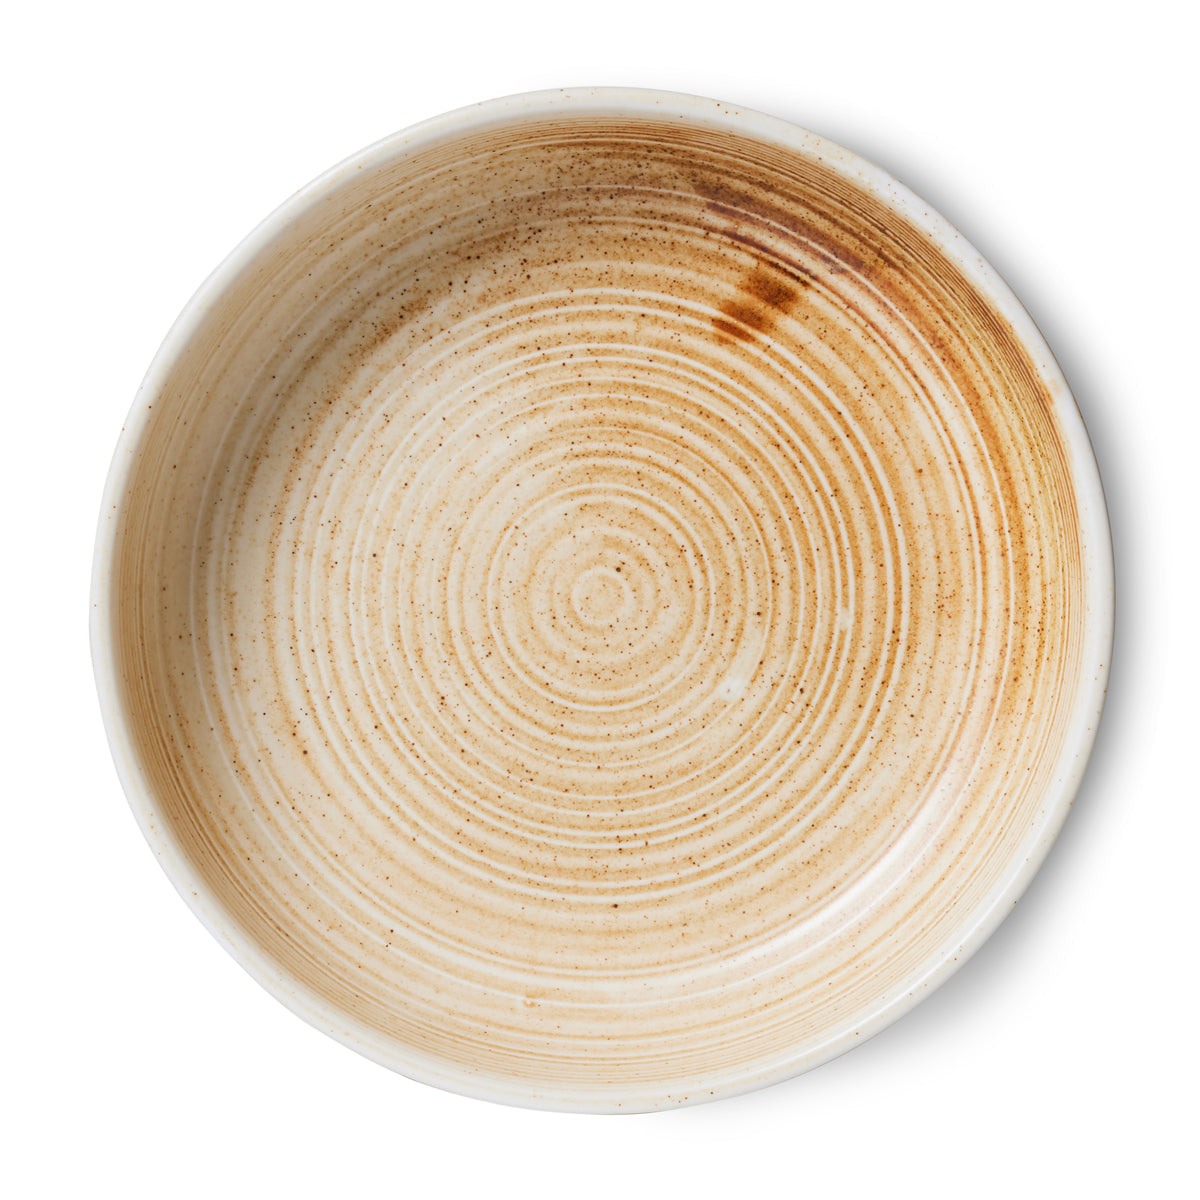 Chef Ceramics: Deep Plate Rustic Cream/Brown